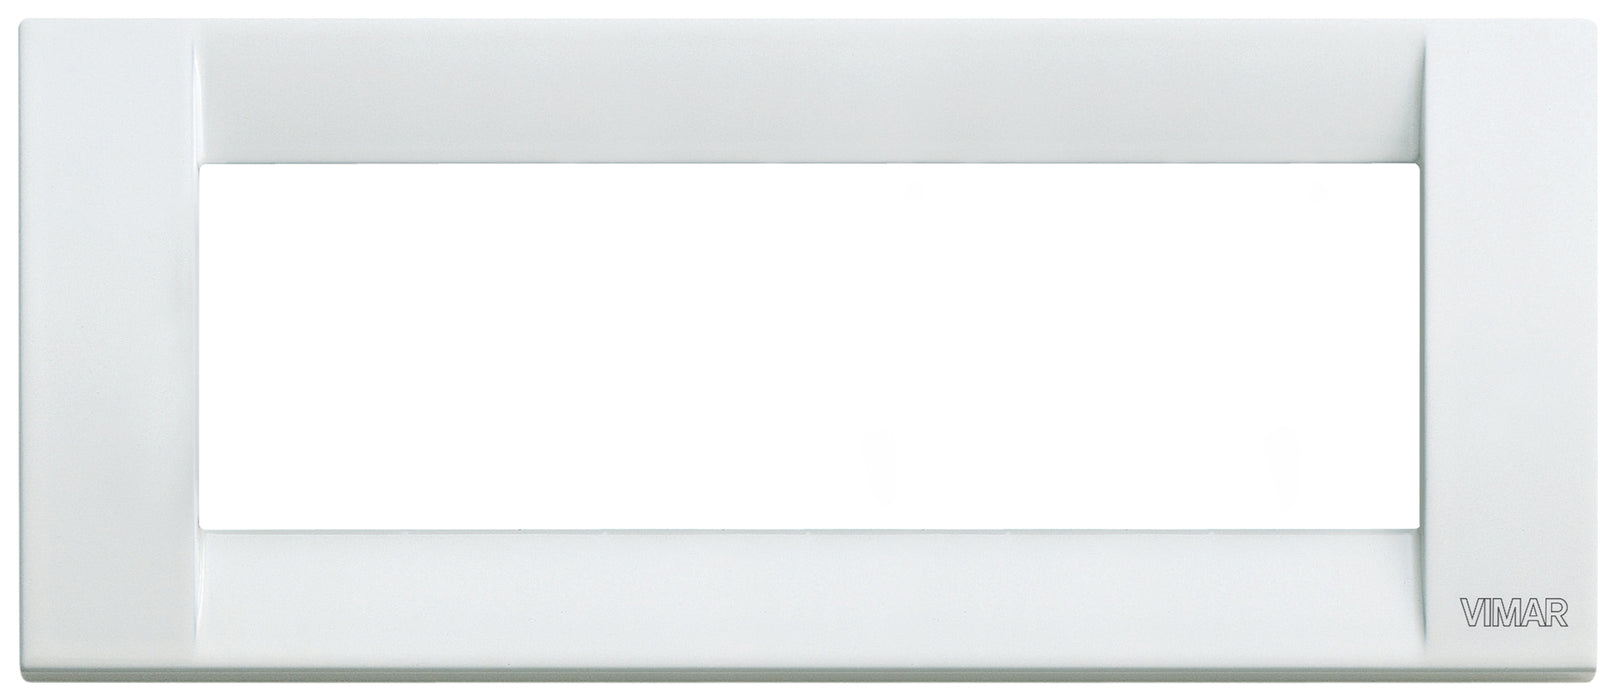 16736.01 - Idea Placca Classica 6M bianco 